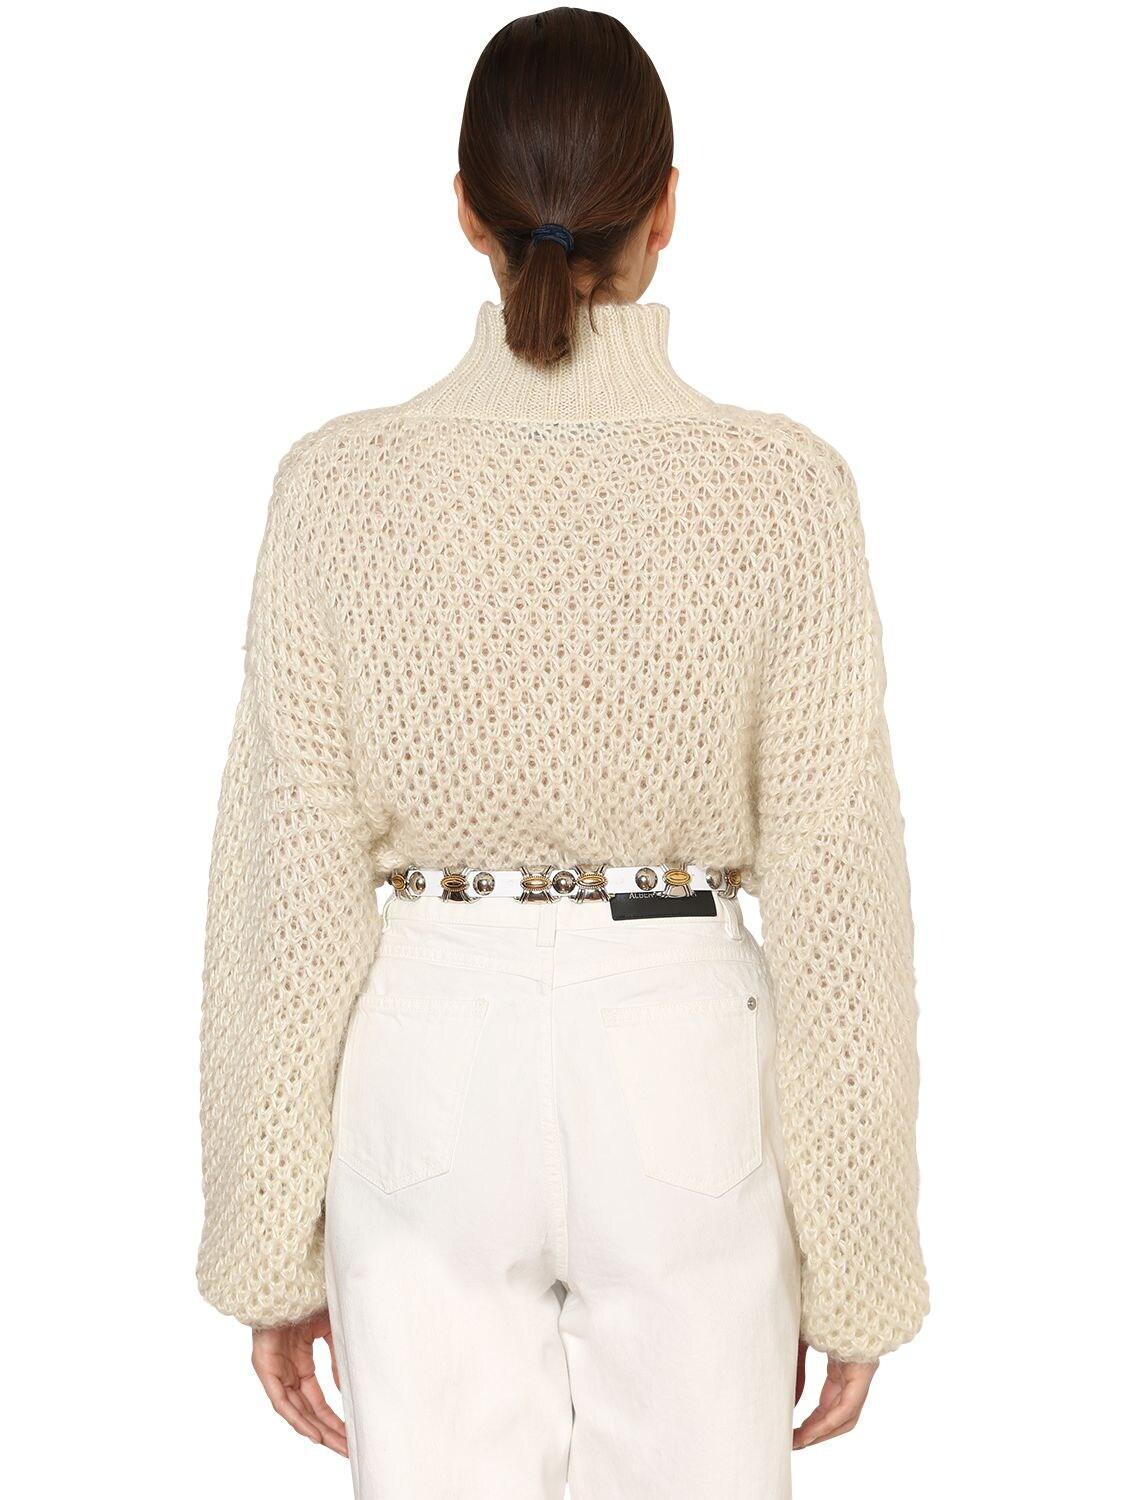 Alberta Ferretti Superkid Mohair Blend Knit Sweater in White - Lyst